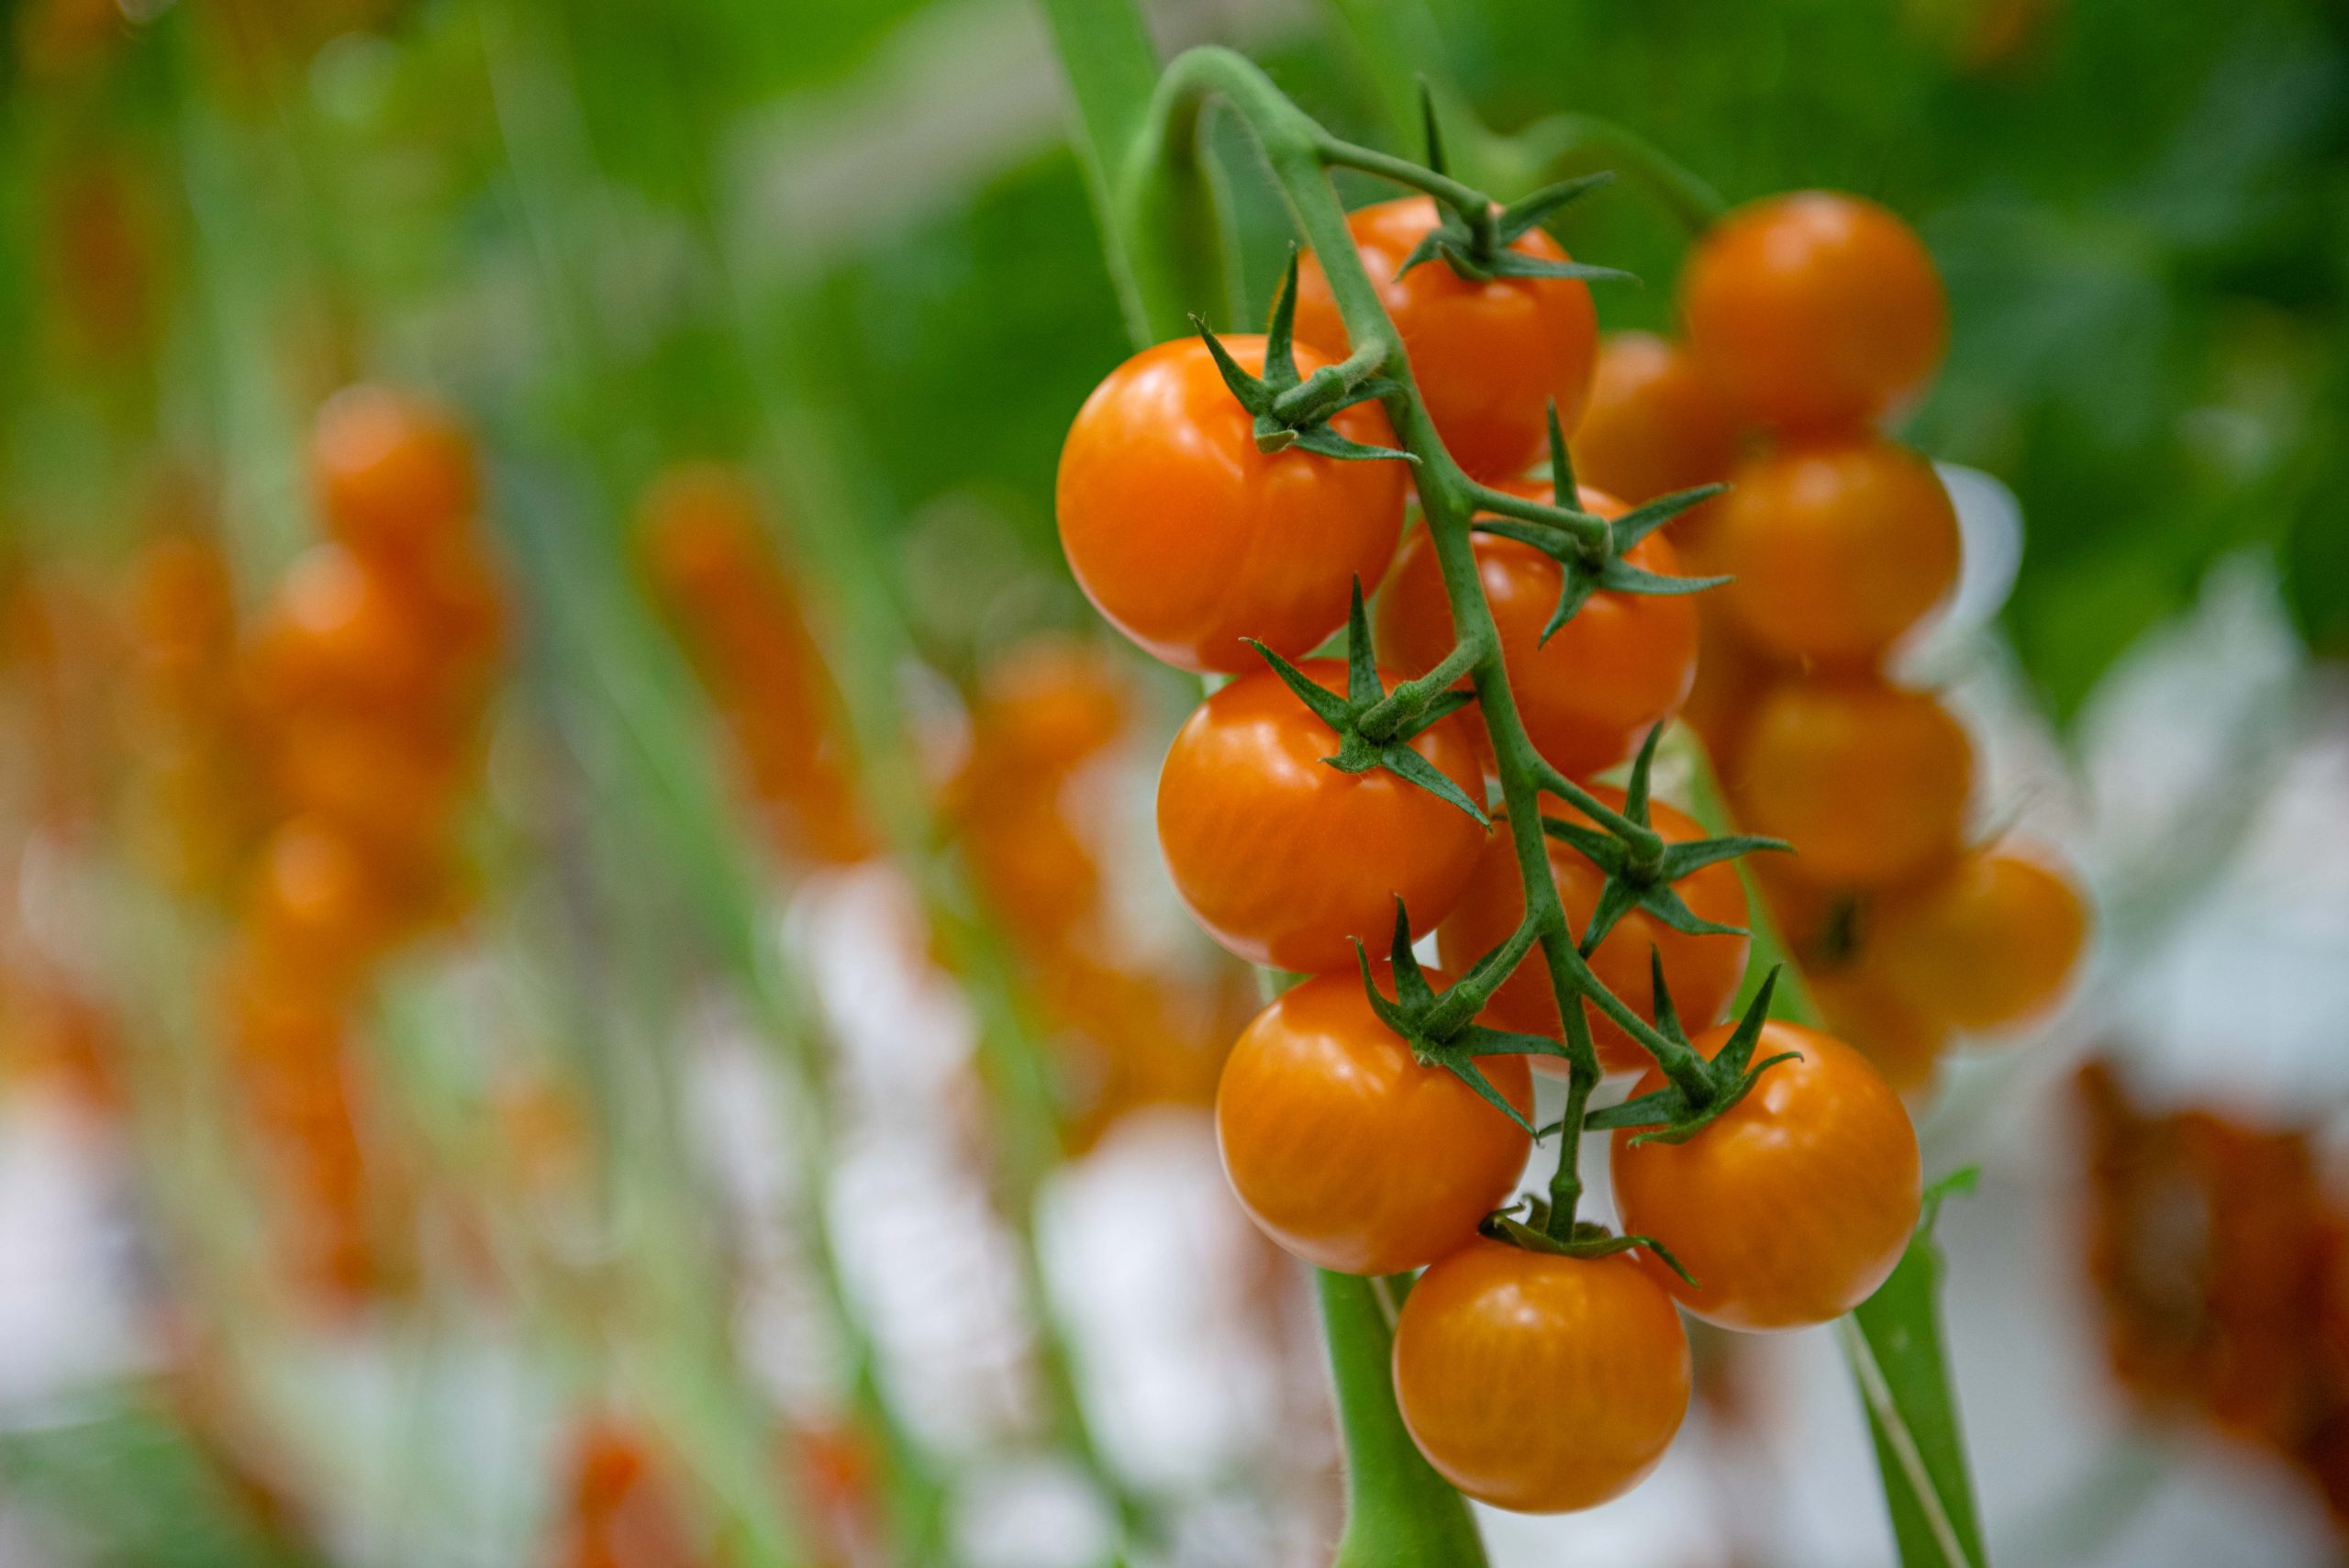 Tips for tomato plants heading into autumn